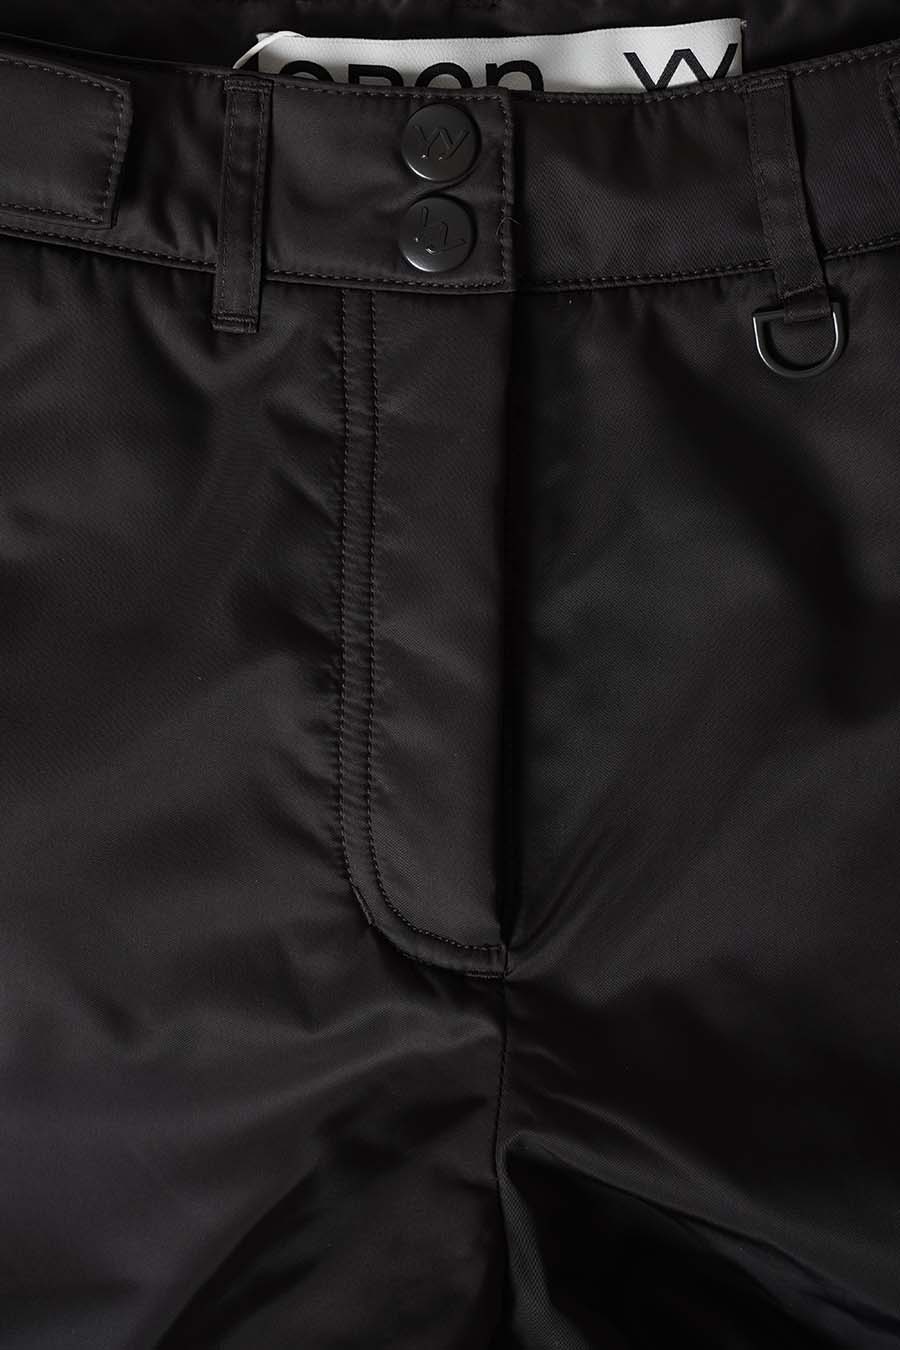 Buy the The North Face 100% Nylon Gray Hiking w Drawstring Pants